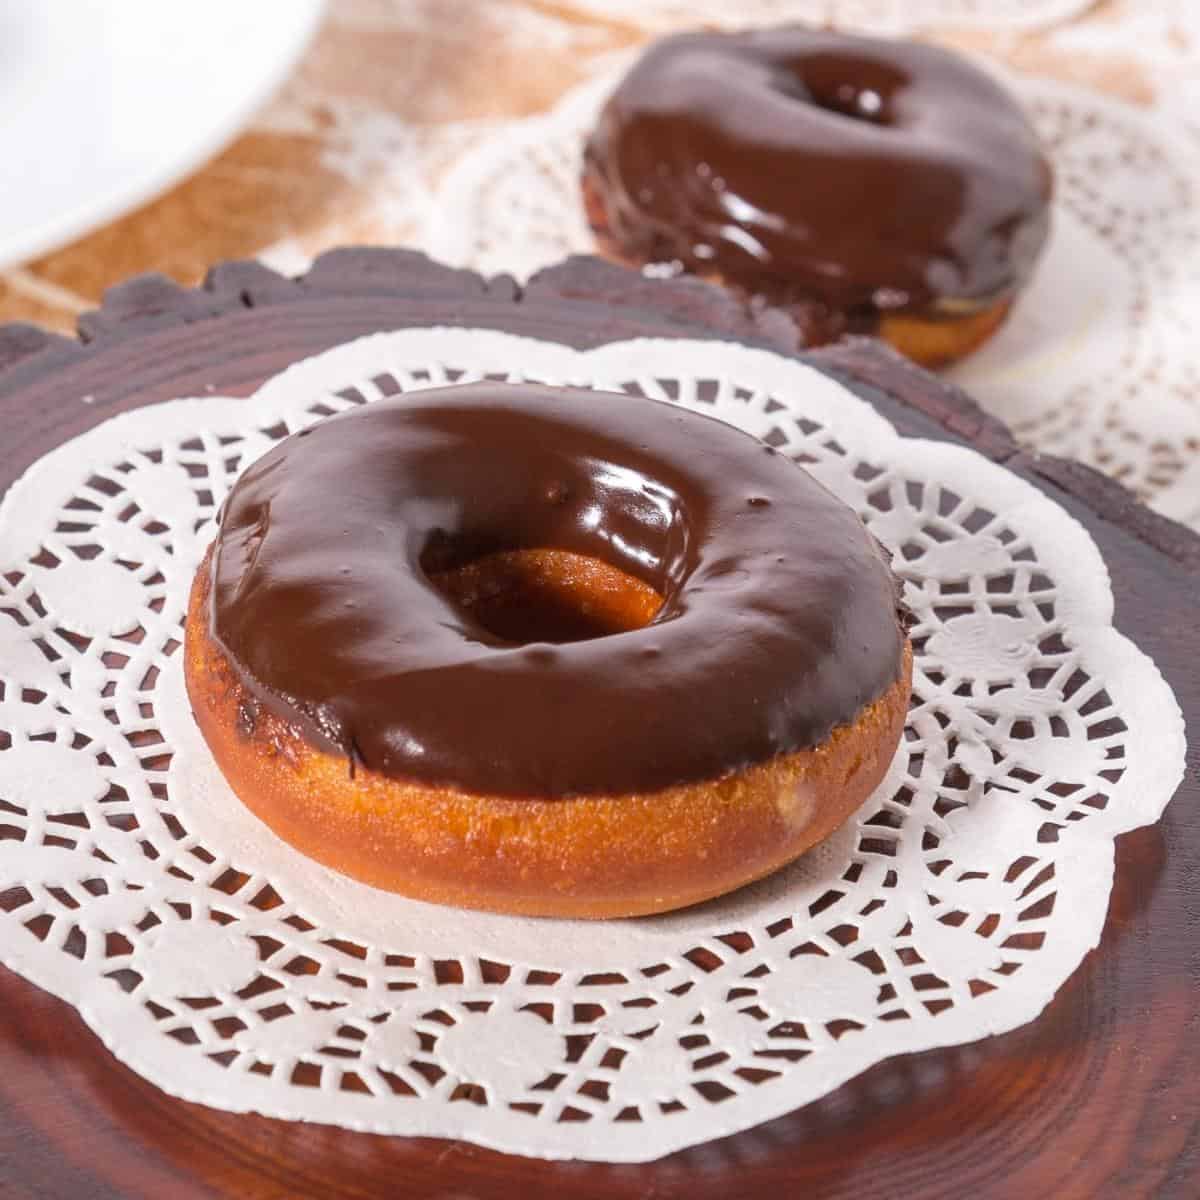 A glazed chocolate donut on a a white doily